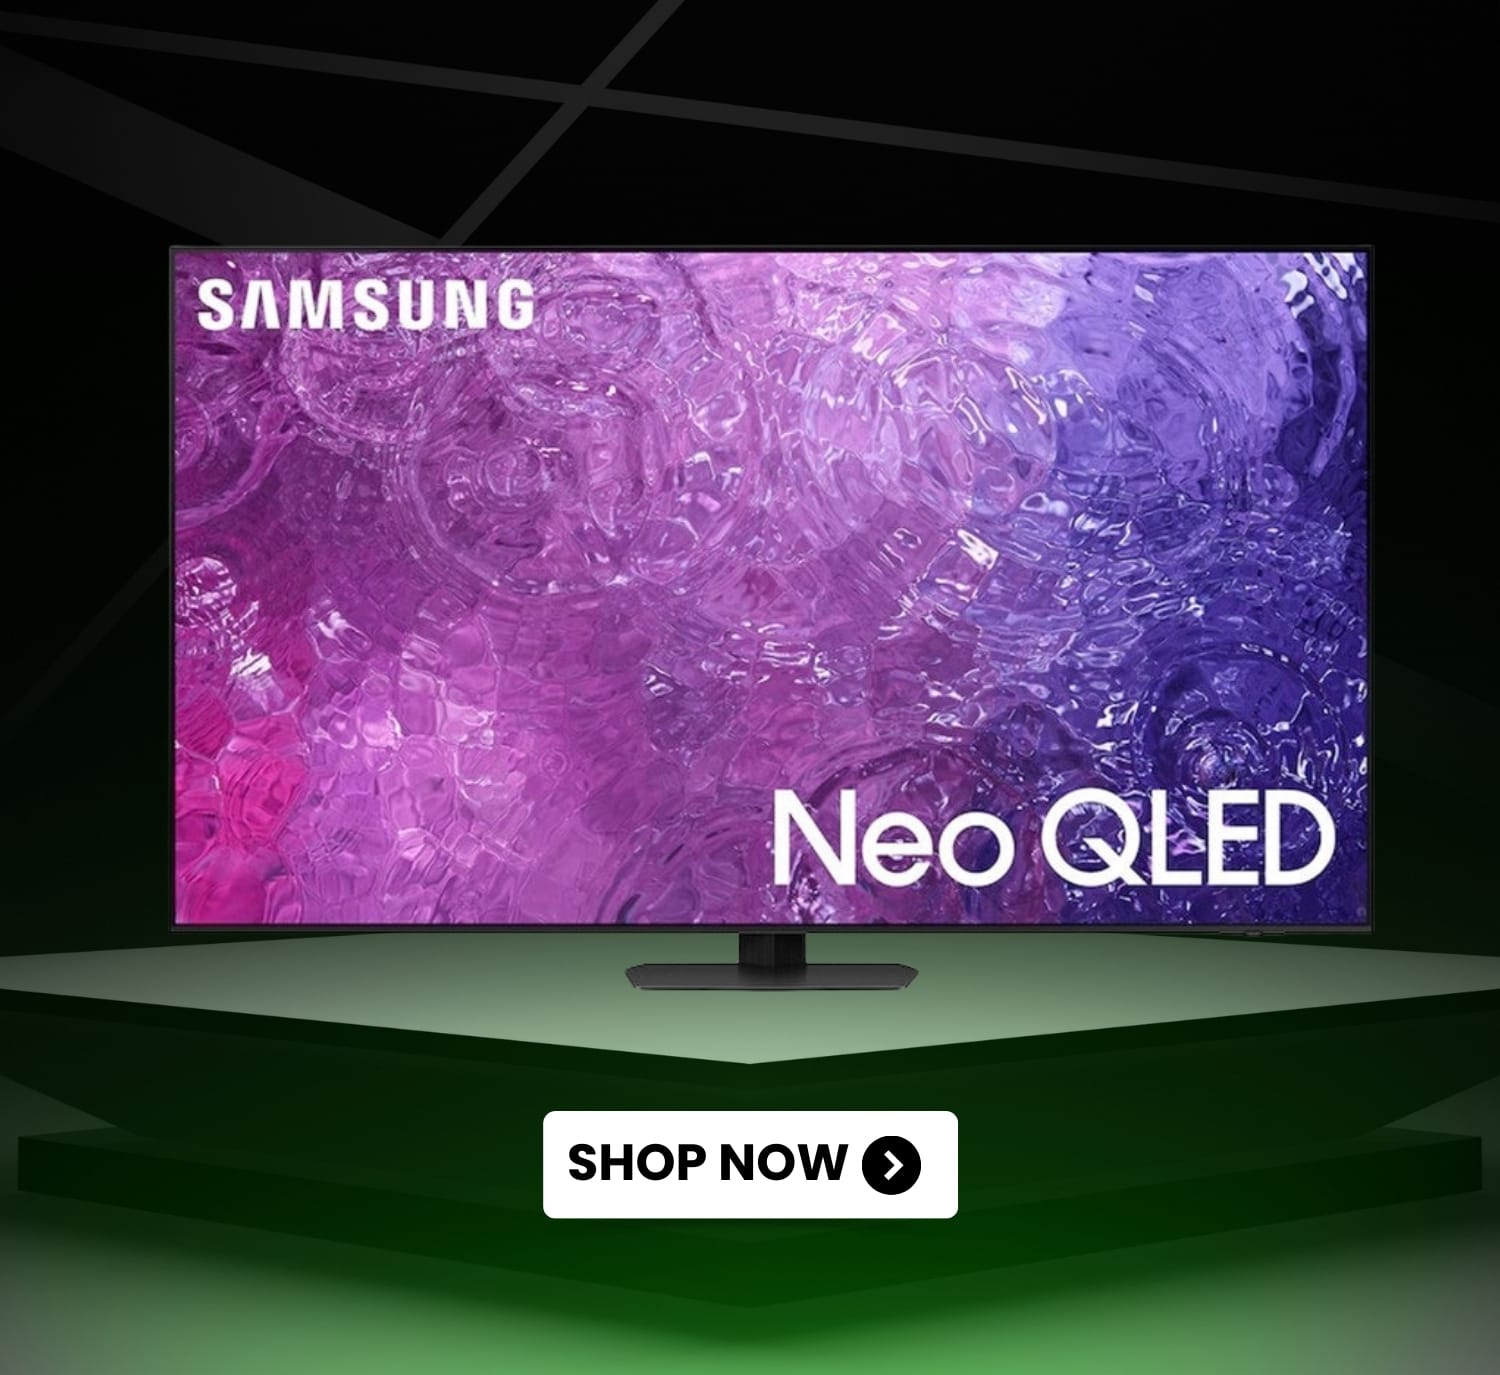 NEO QLED Smart TVs